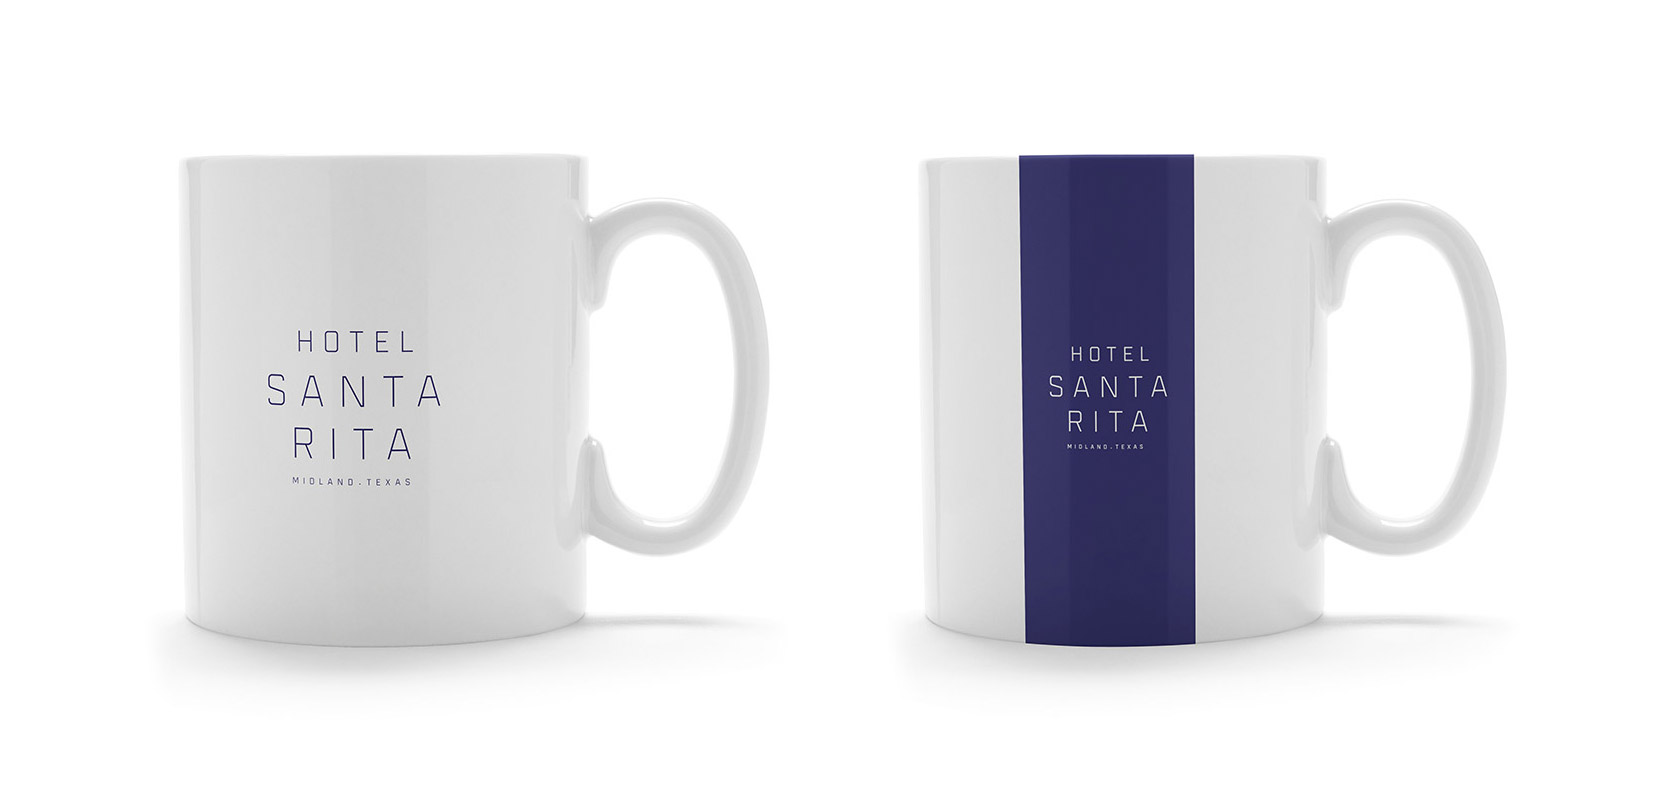 White coffee mugs with a blue stripe and the Hotel Santa Rita logo.